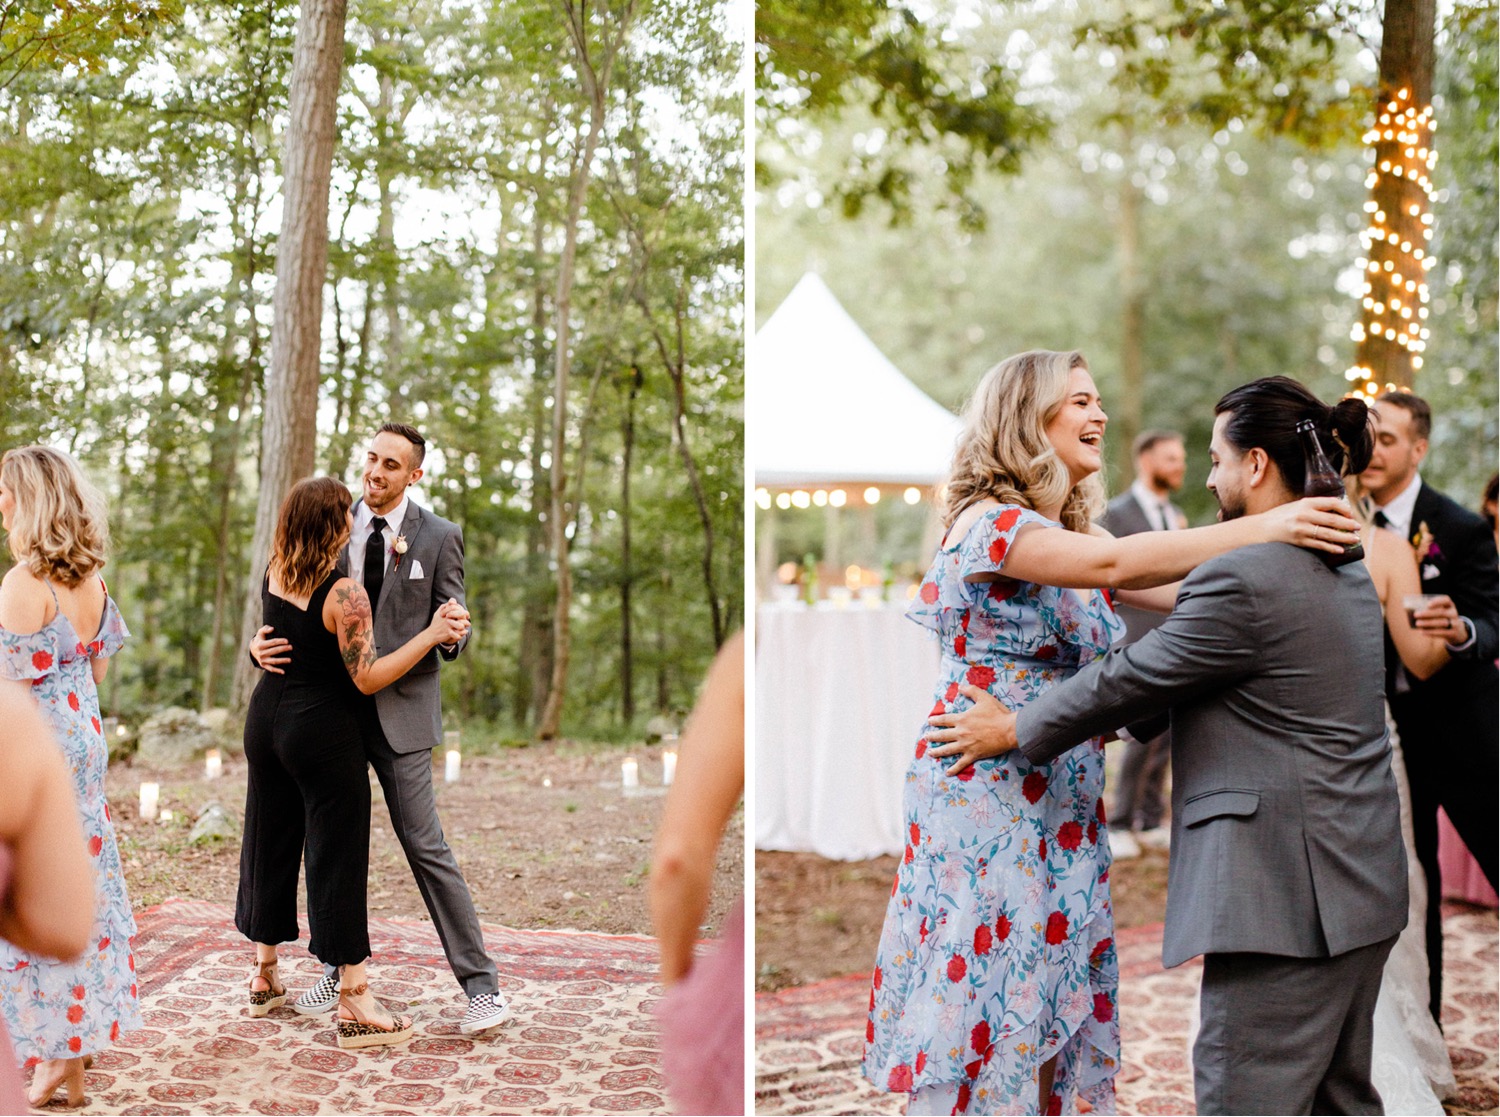 guests dancing in forest backyard wedding